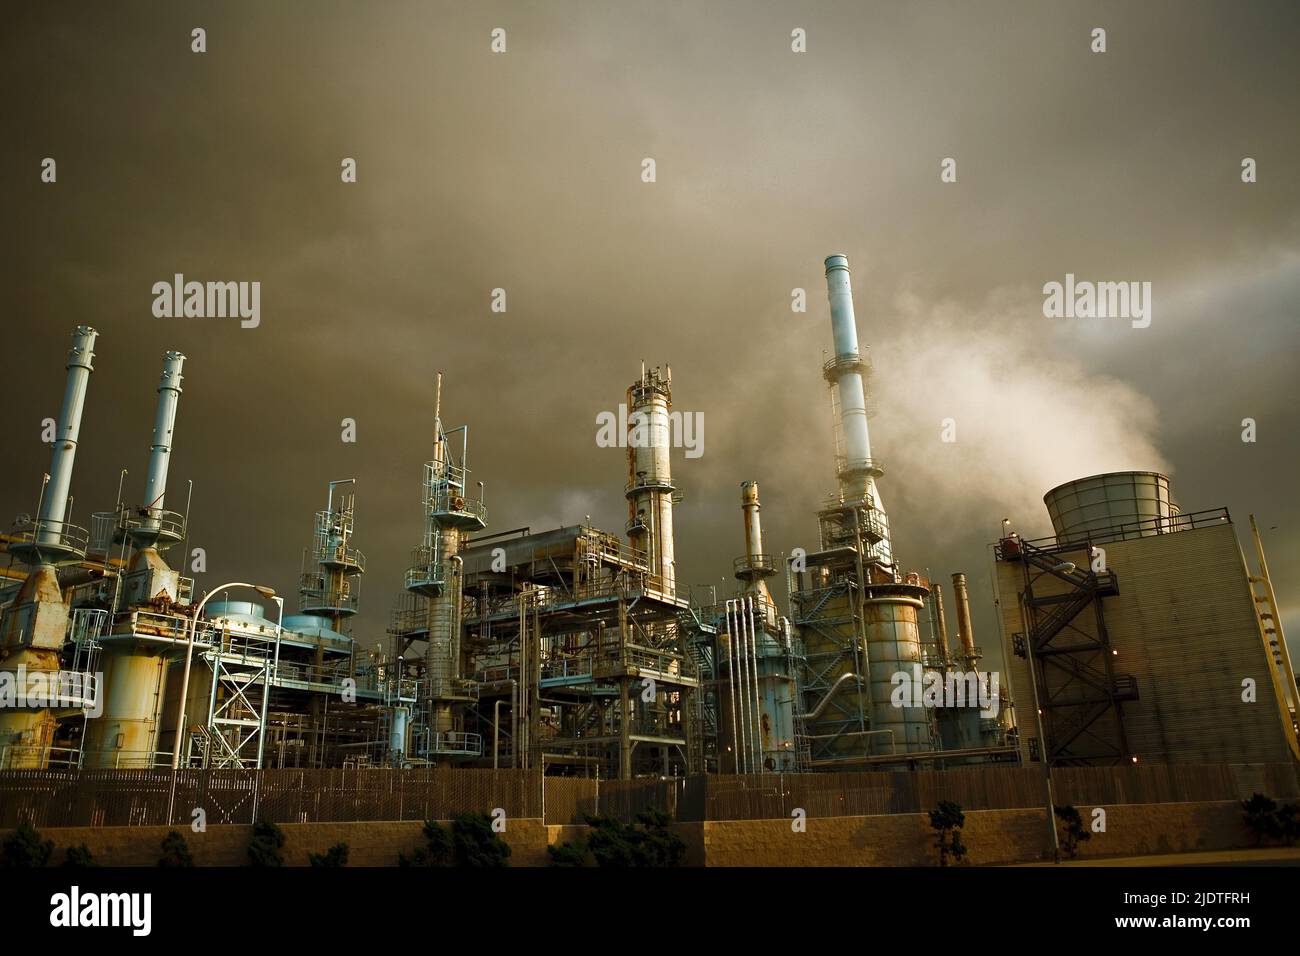 USA, California, Longbeach, Oil refinery at dusk Stock Photo